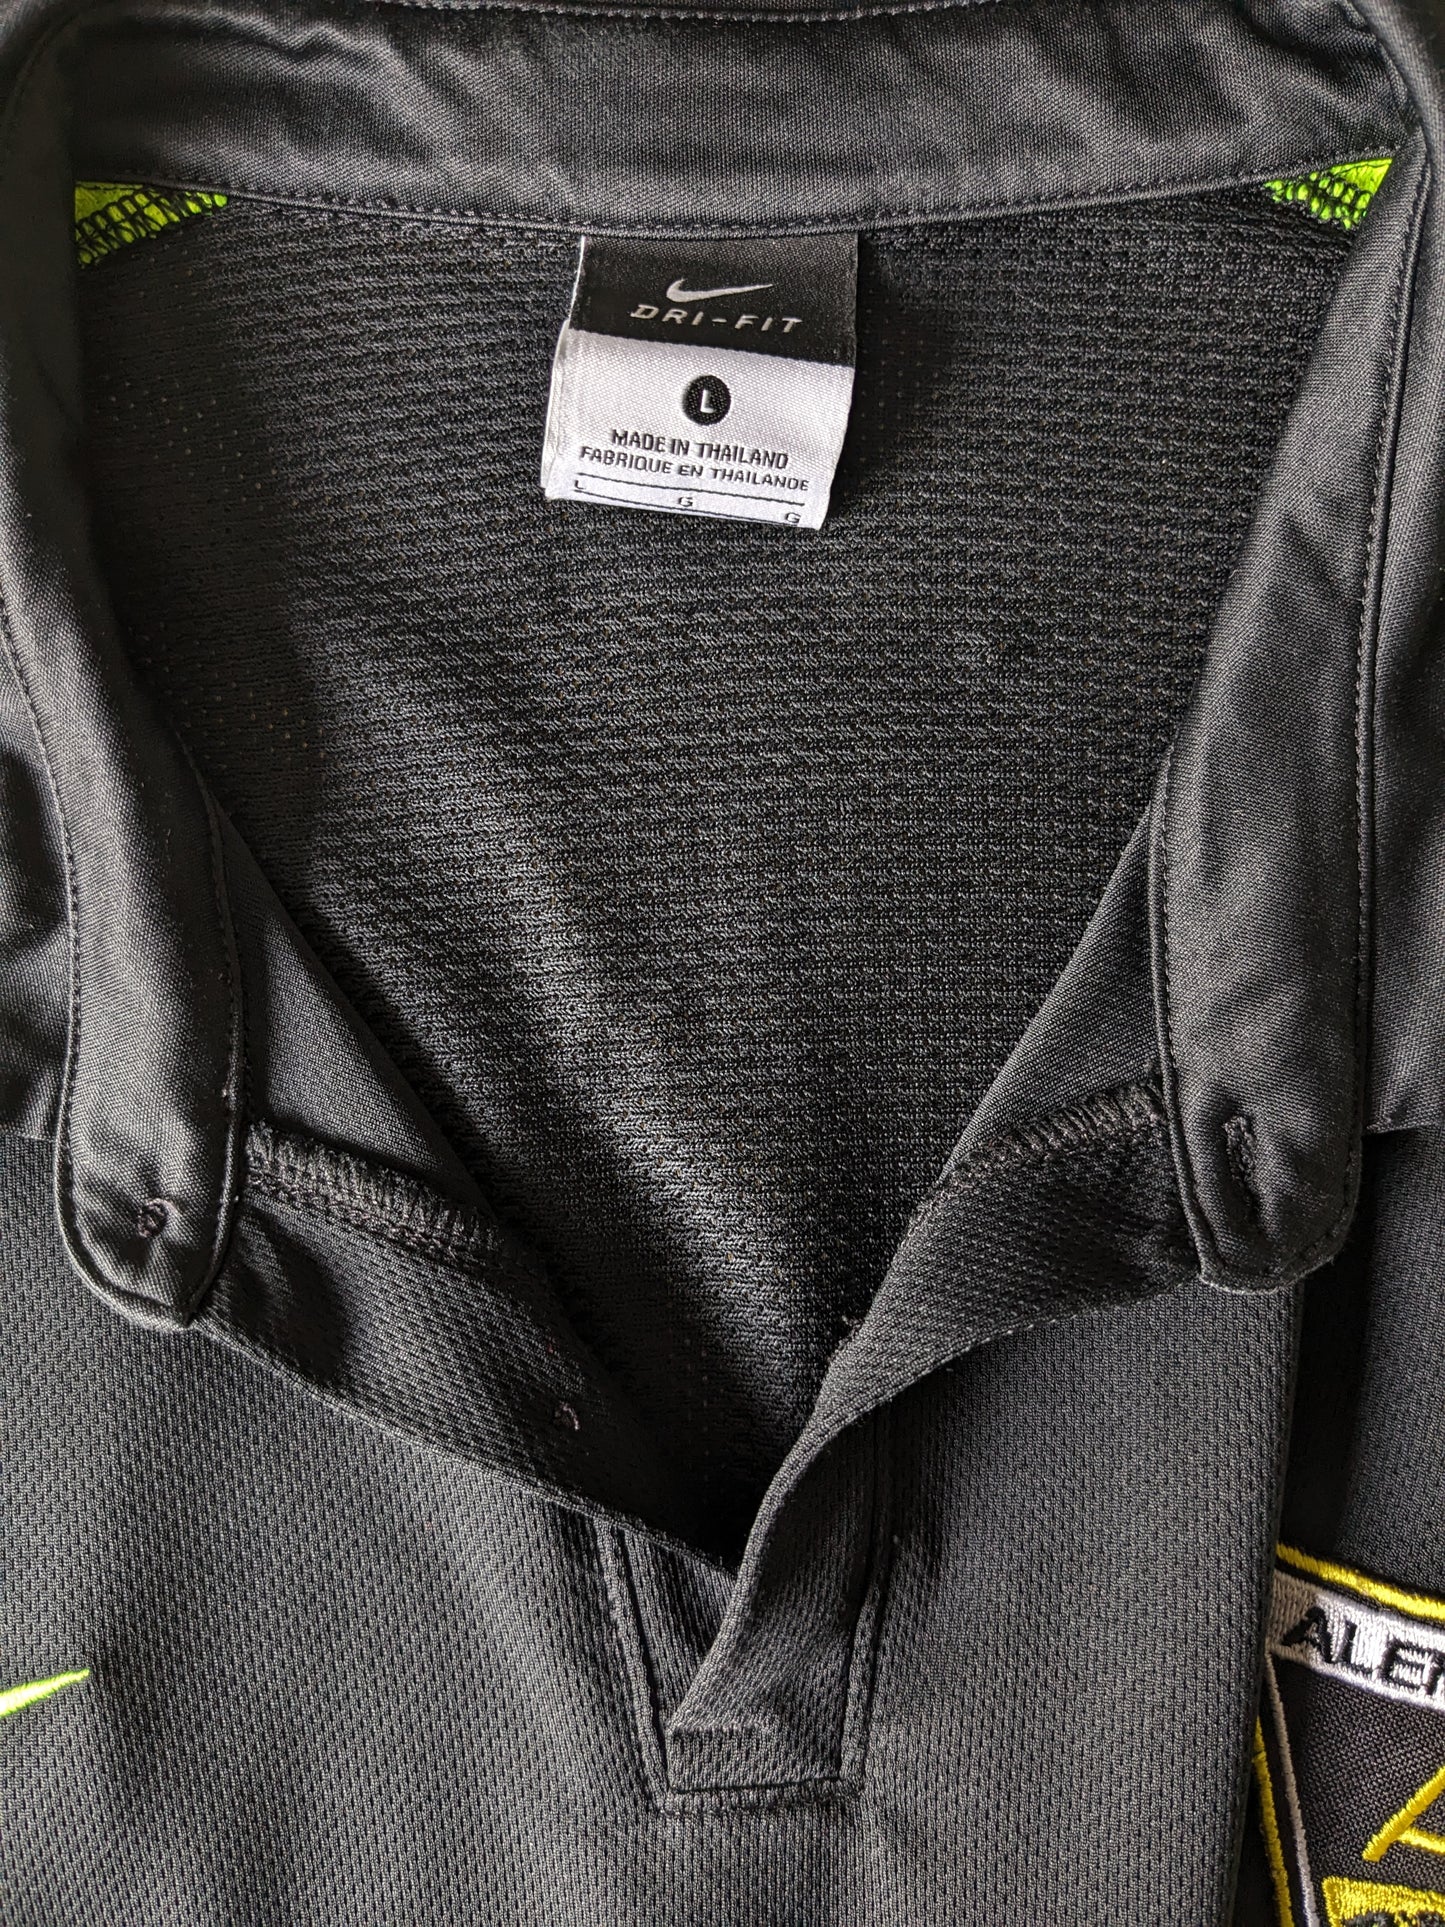 Nike Alemannia sport polo. Zwart Groen gekleurd. Maat L.